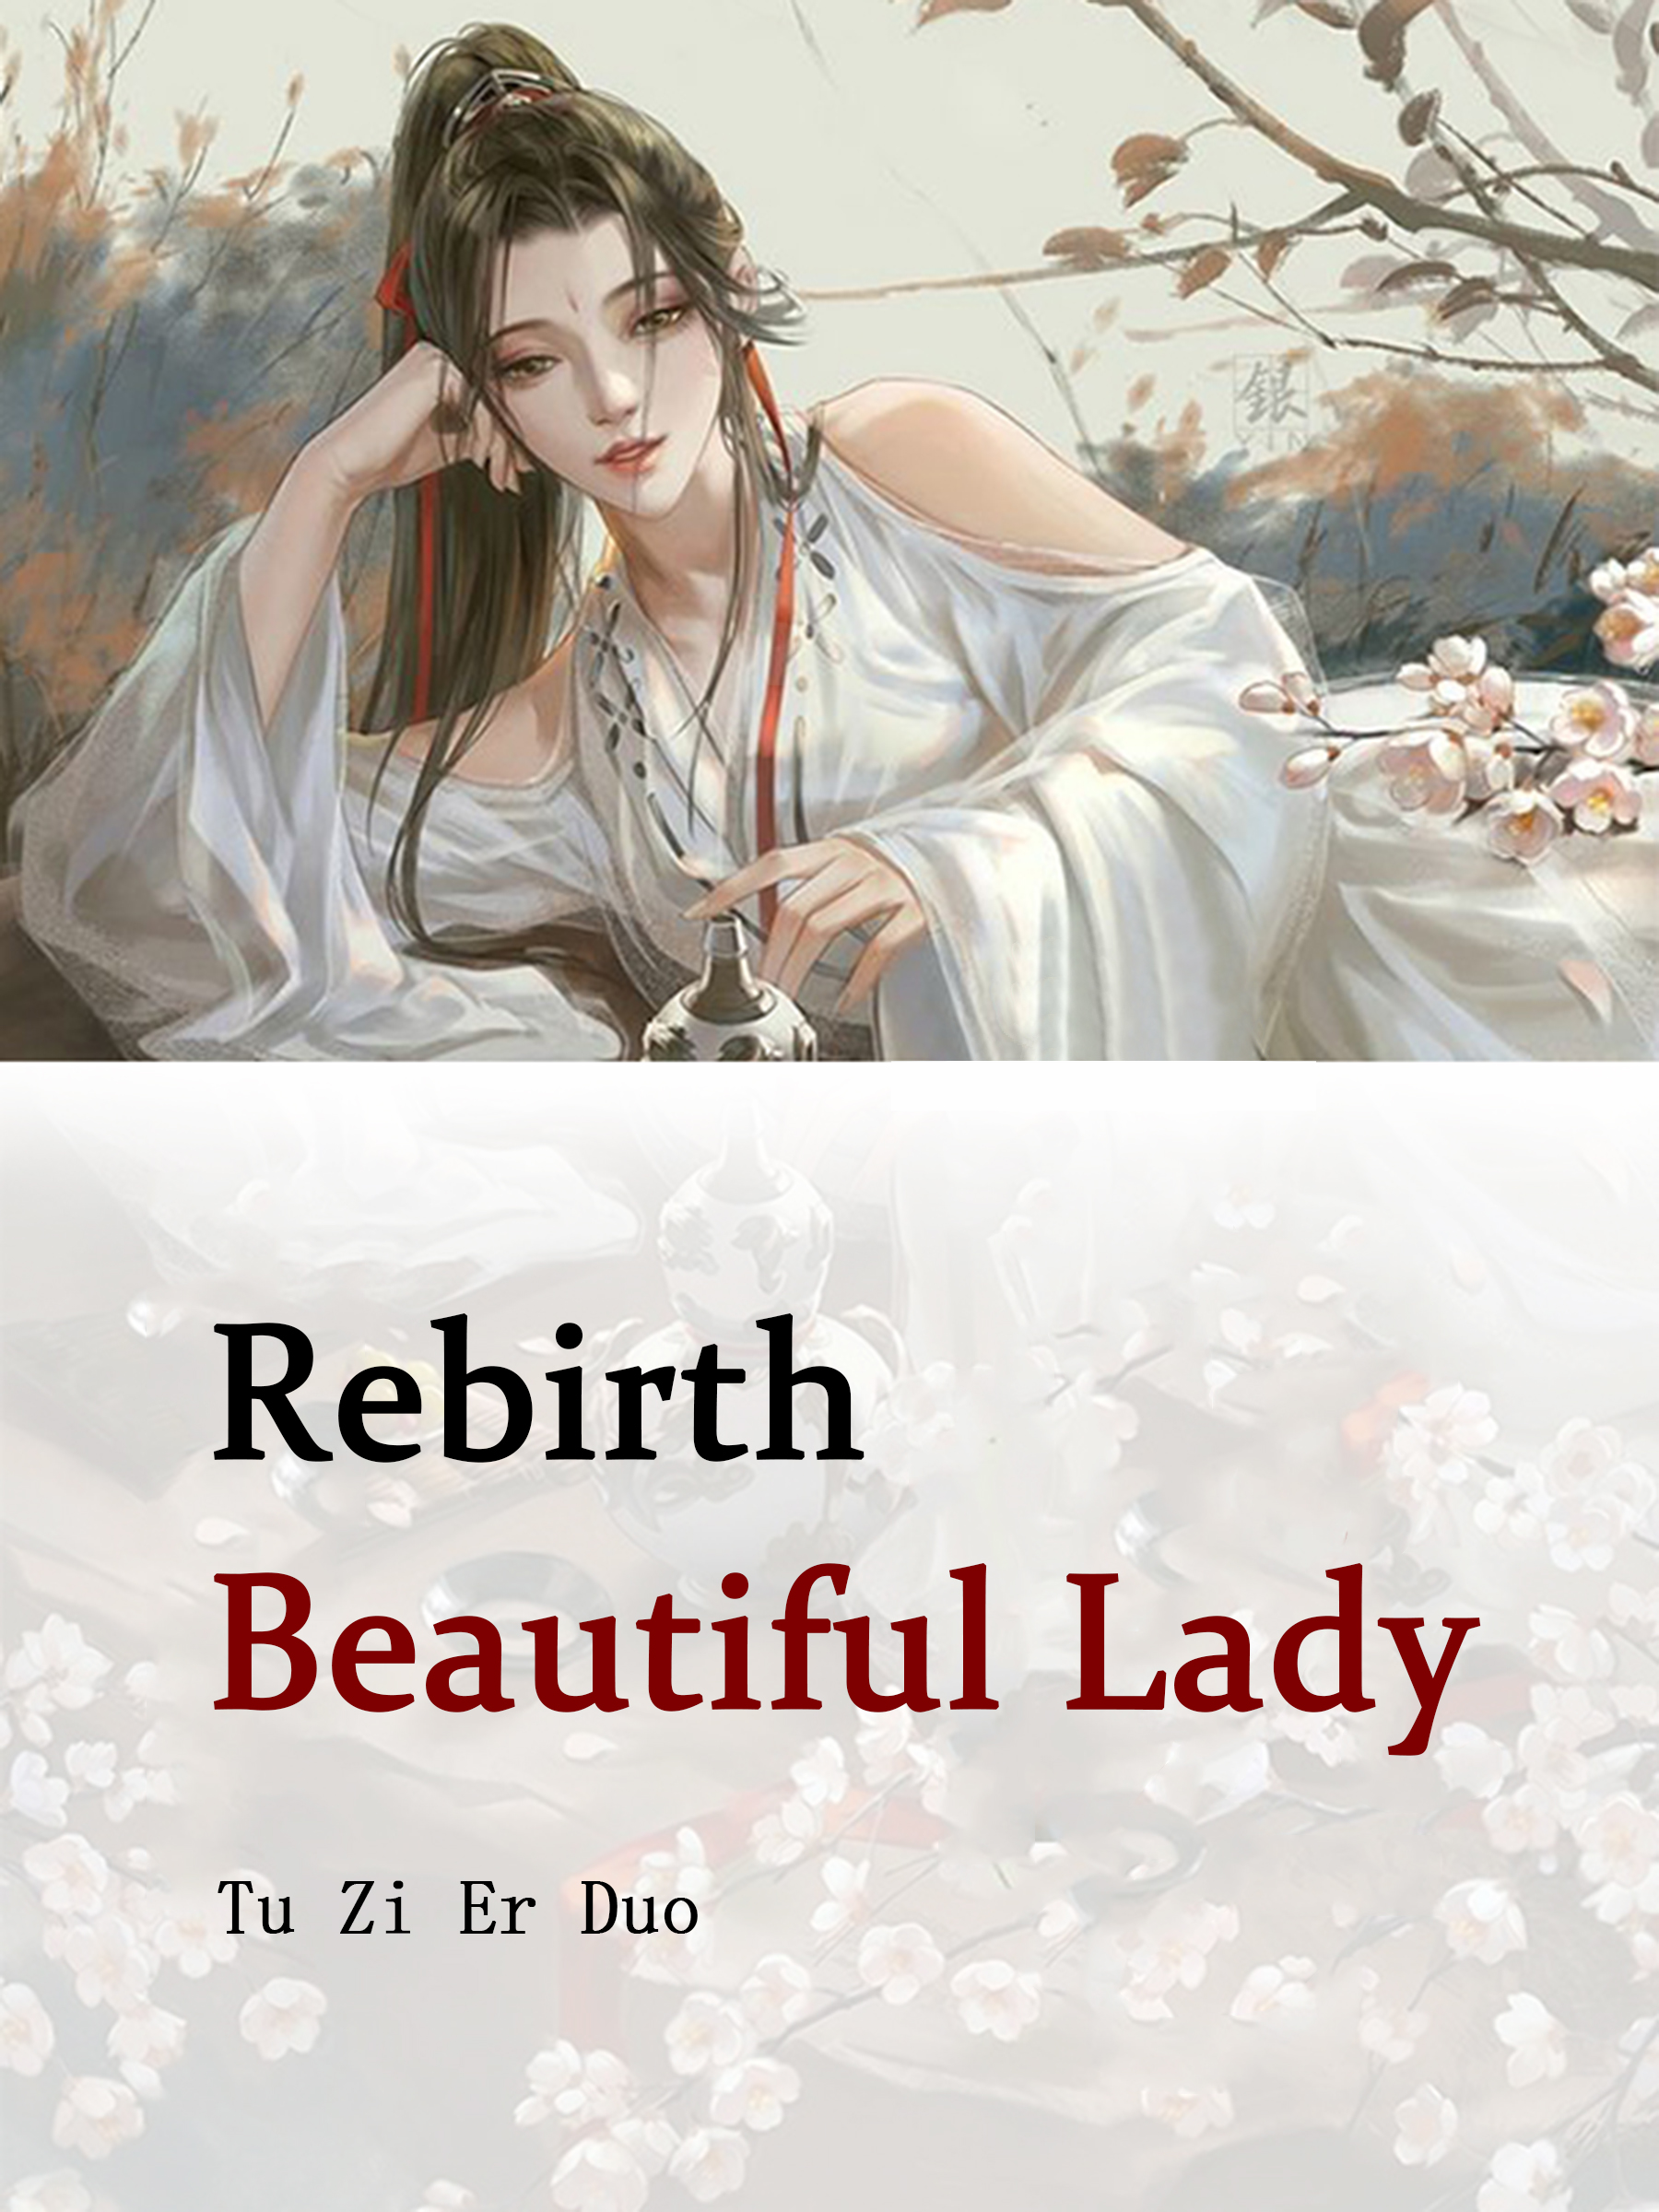 Rebirth: Beautiful Lady Novel Full Story | Book - BabelNovel